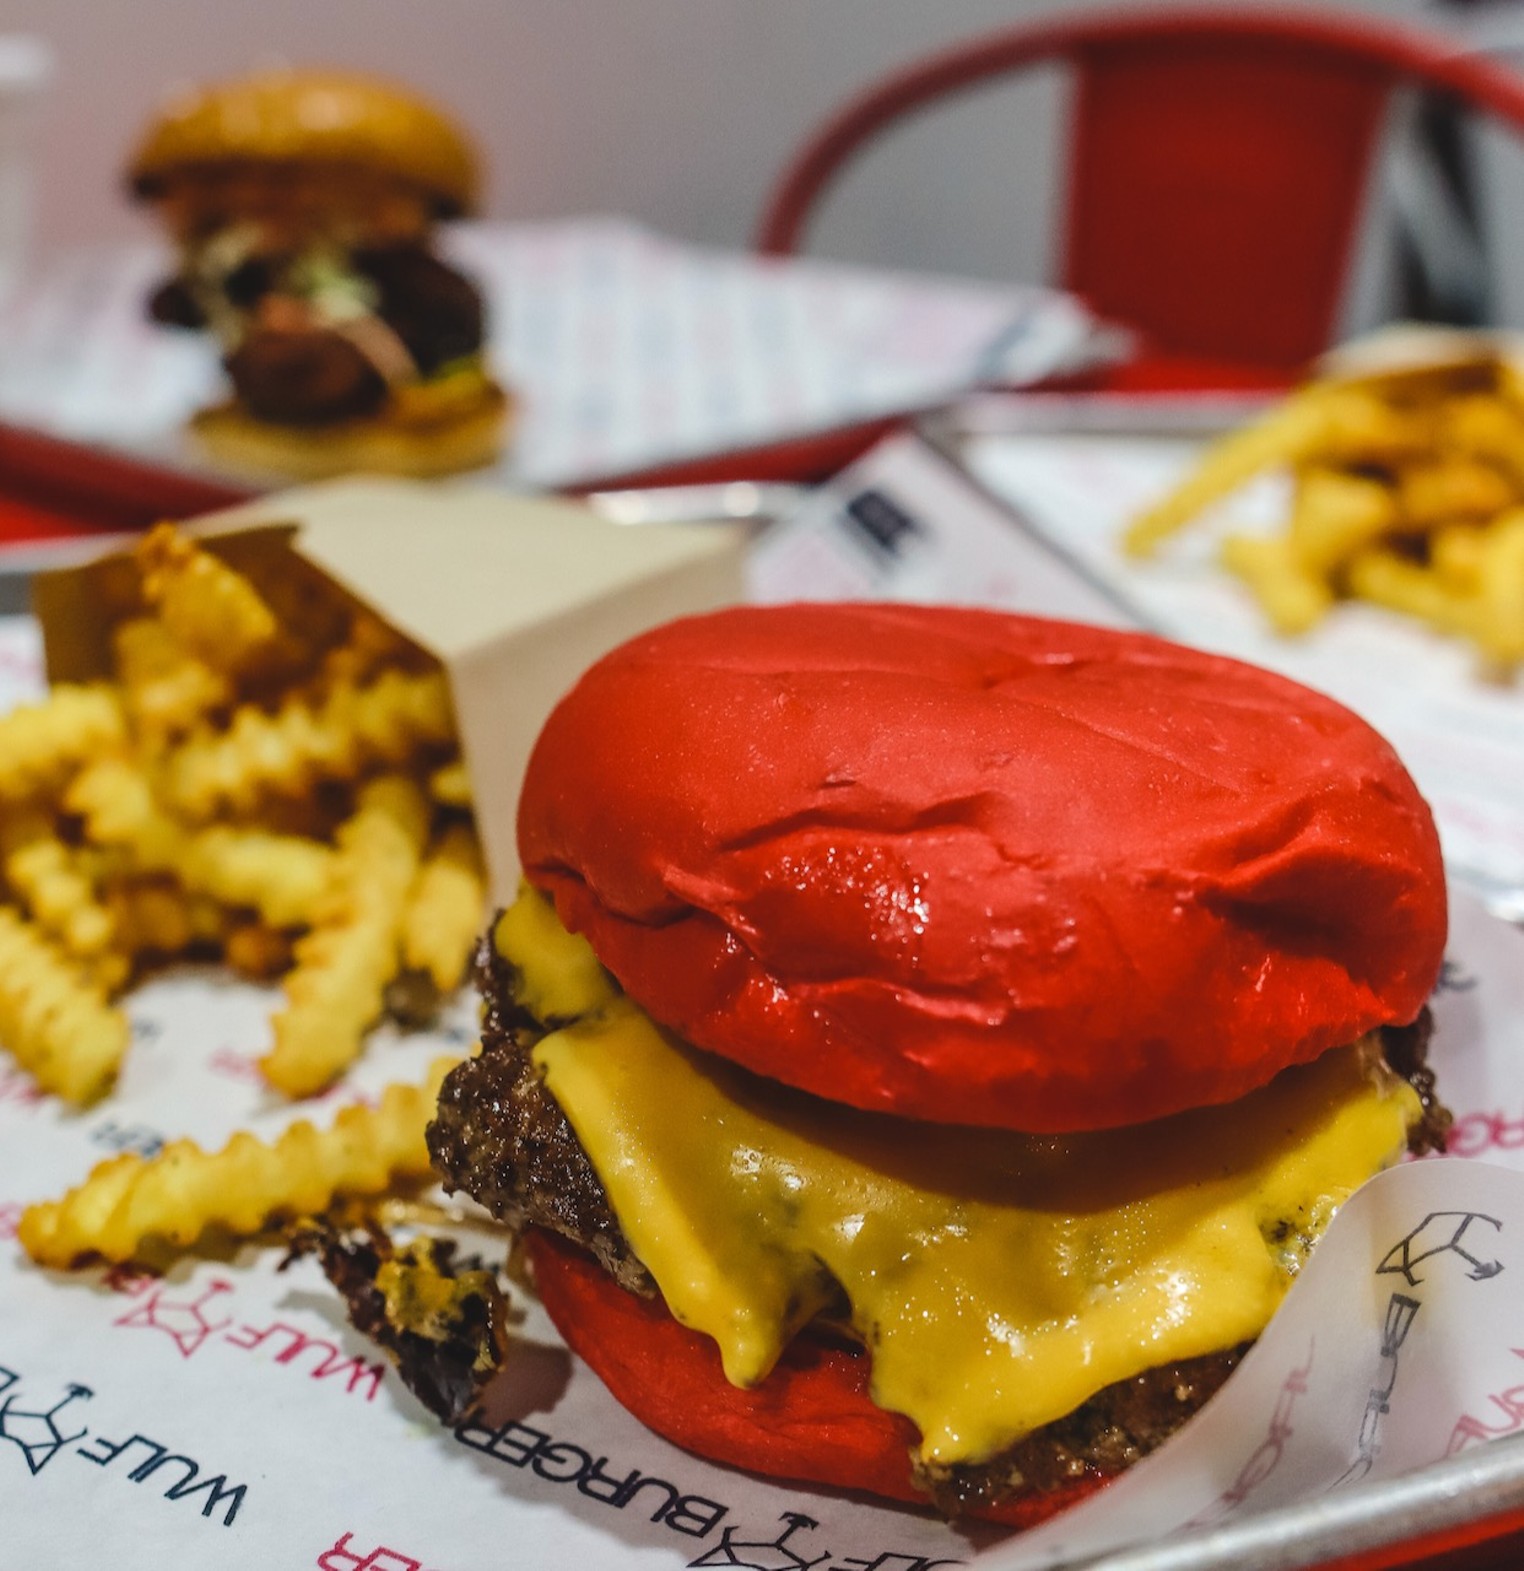 jul pilfer Numerisk Wulf Burger Serves Salacious Burgers on Red Buns and Beyond | Dallas  Observer